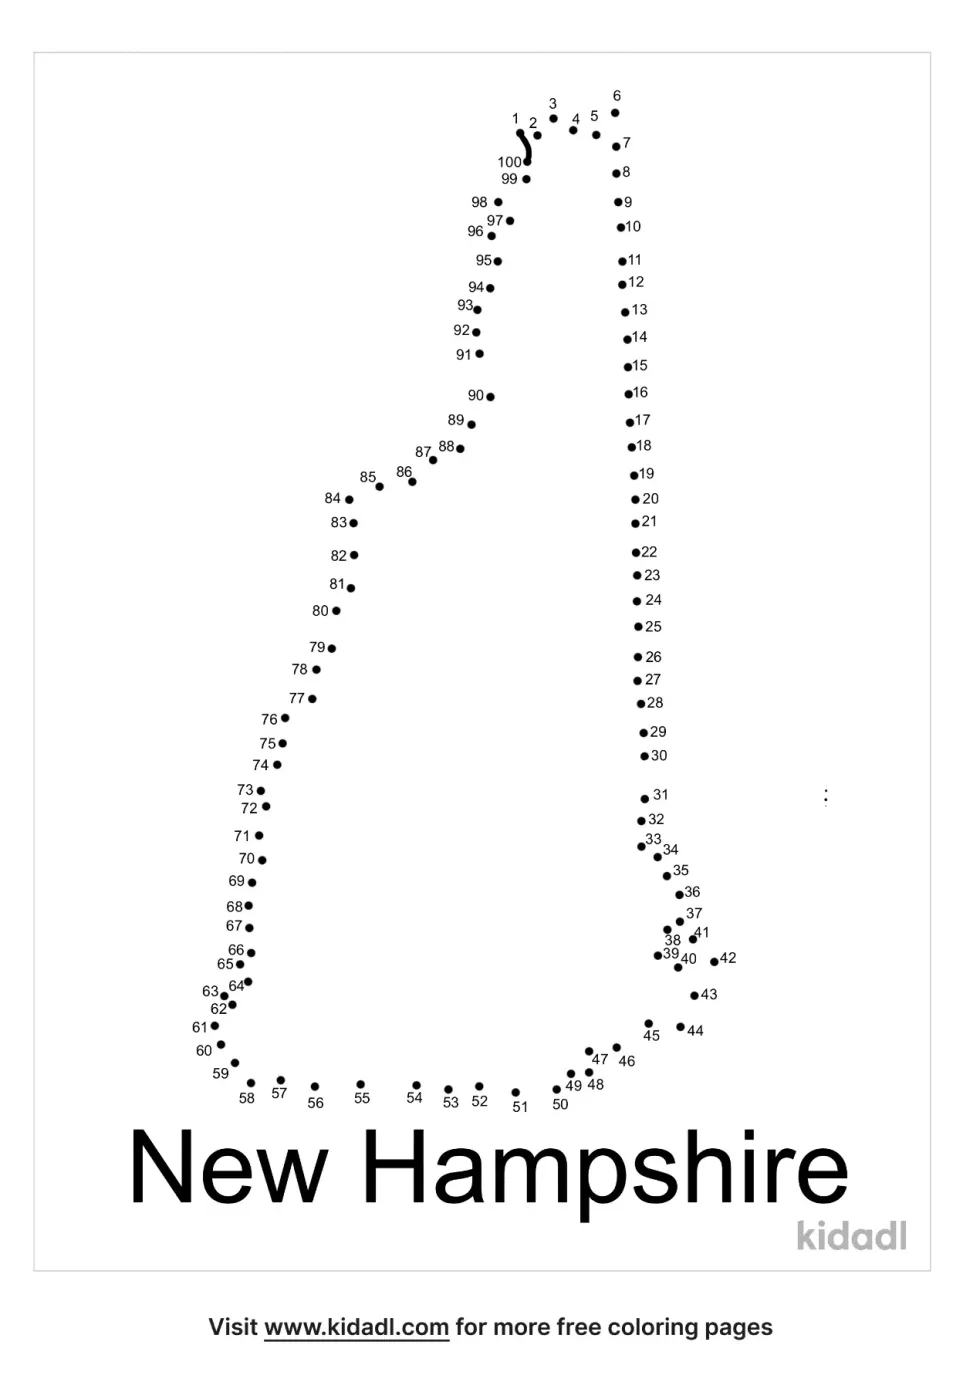 New Hampshire Dot To Dot (Hard)